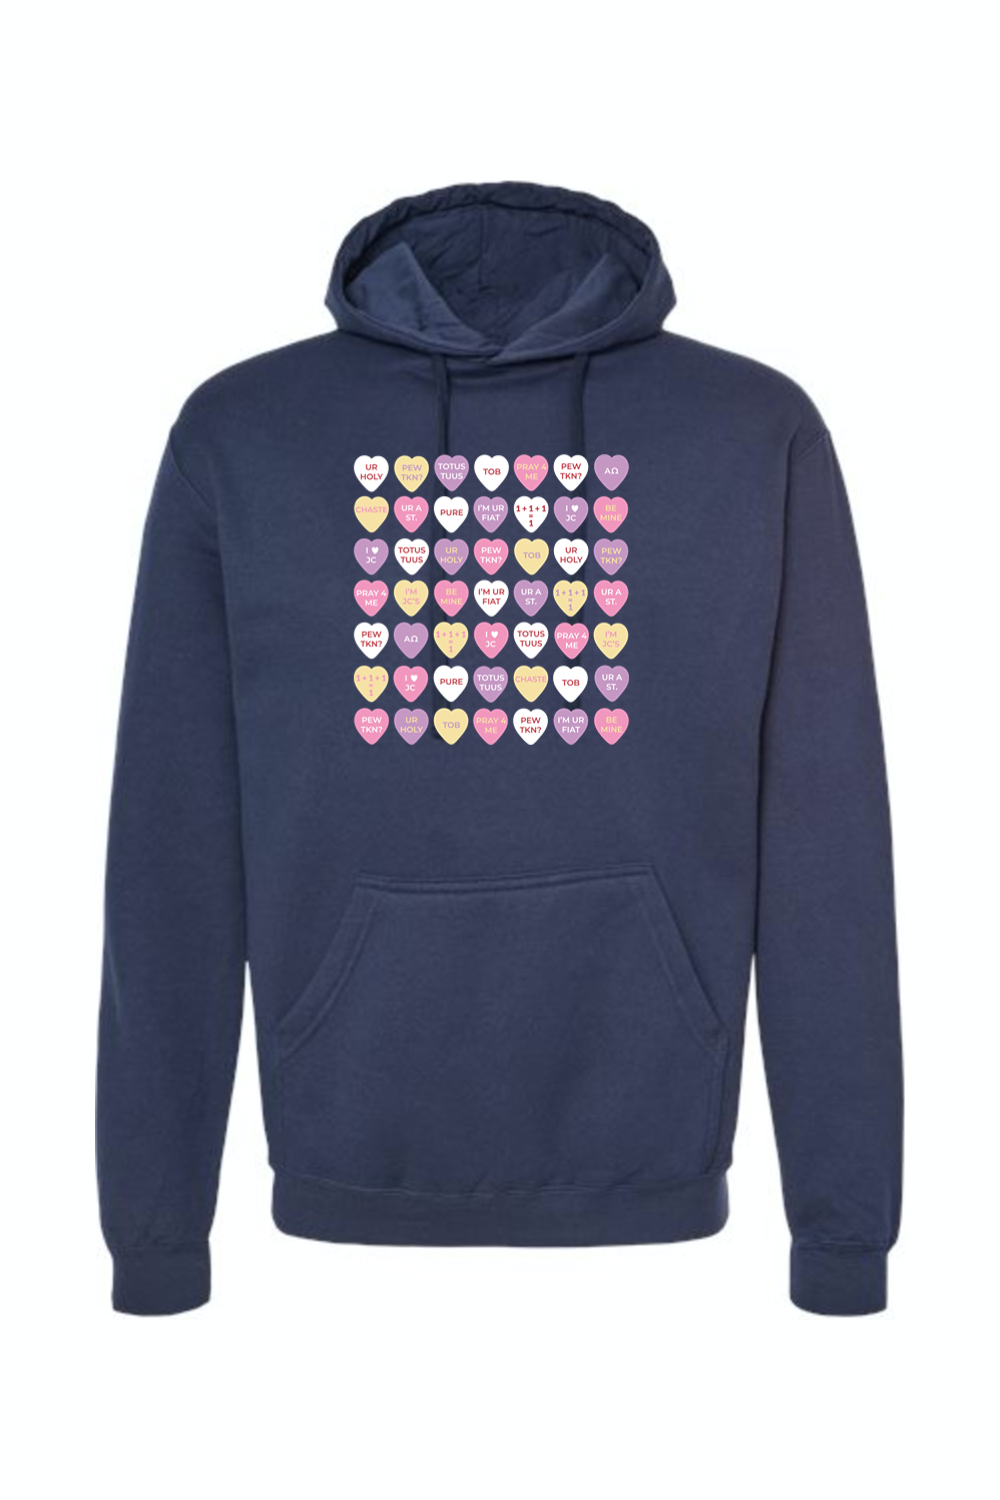 Candy Hearts - Hoodie Sweatshirt